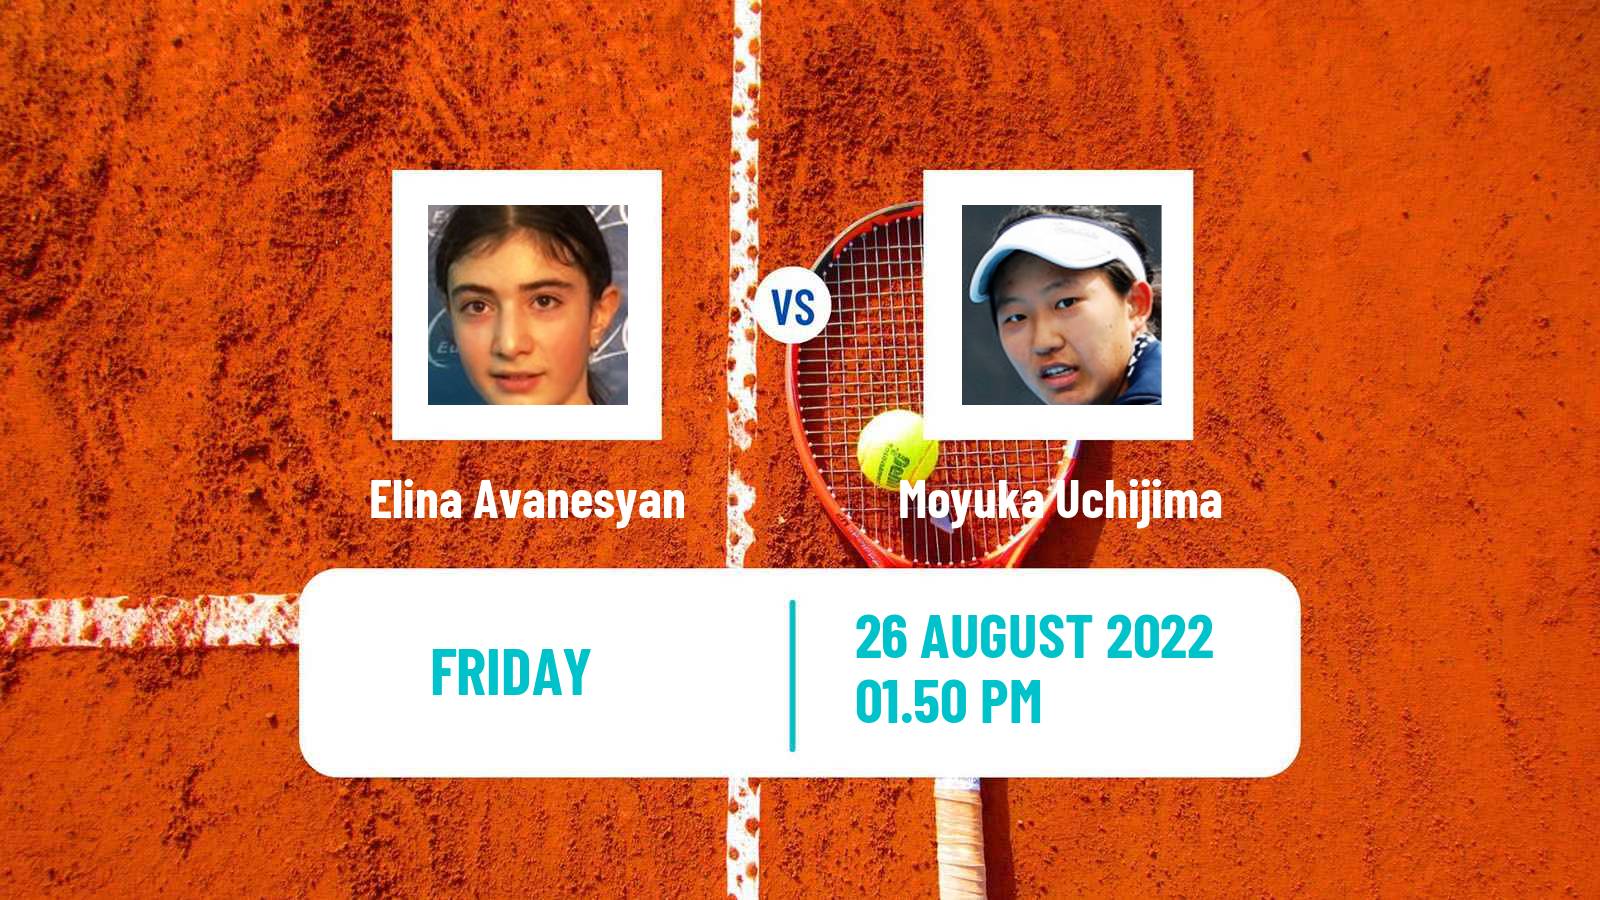 Tennis WTA US Open Elina Avanesyan - Moyuka Uchijima